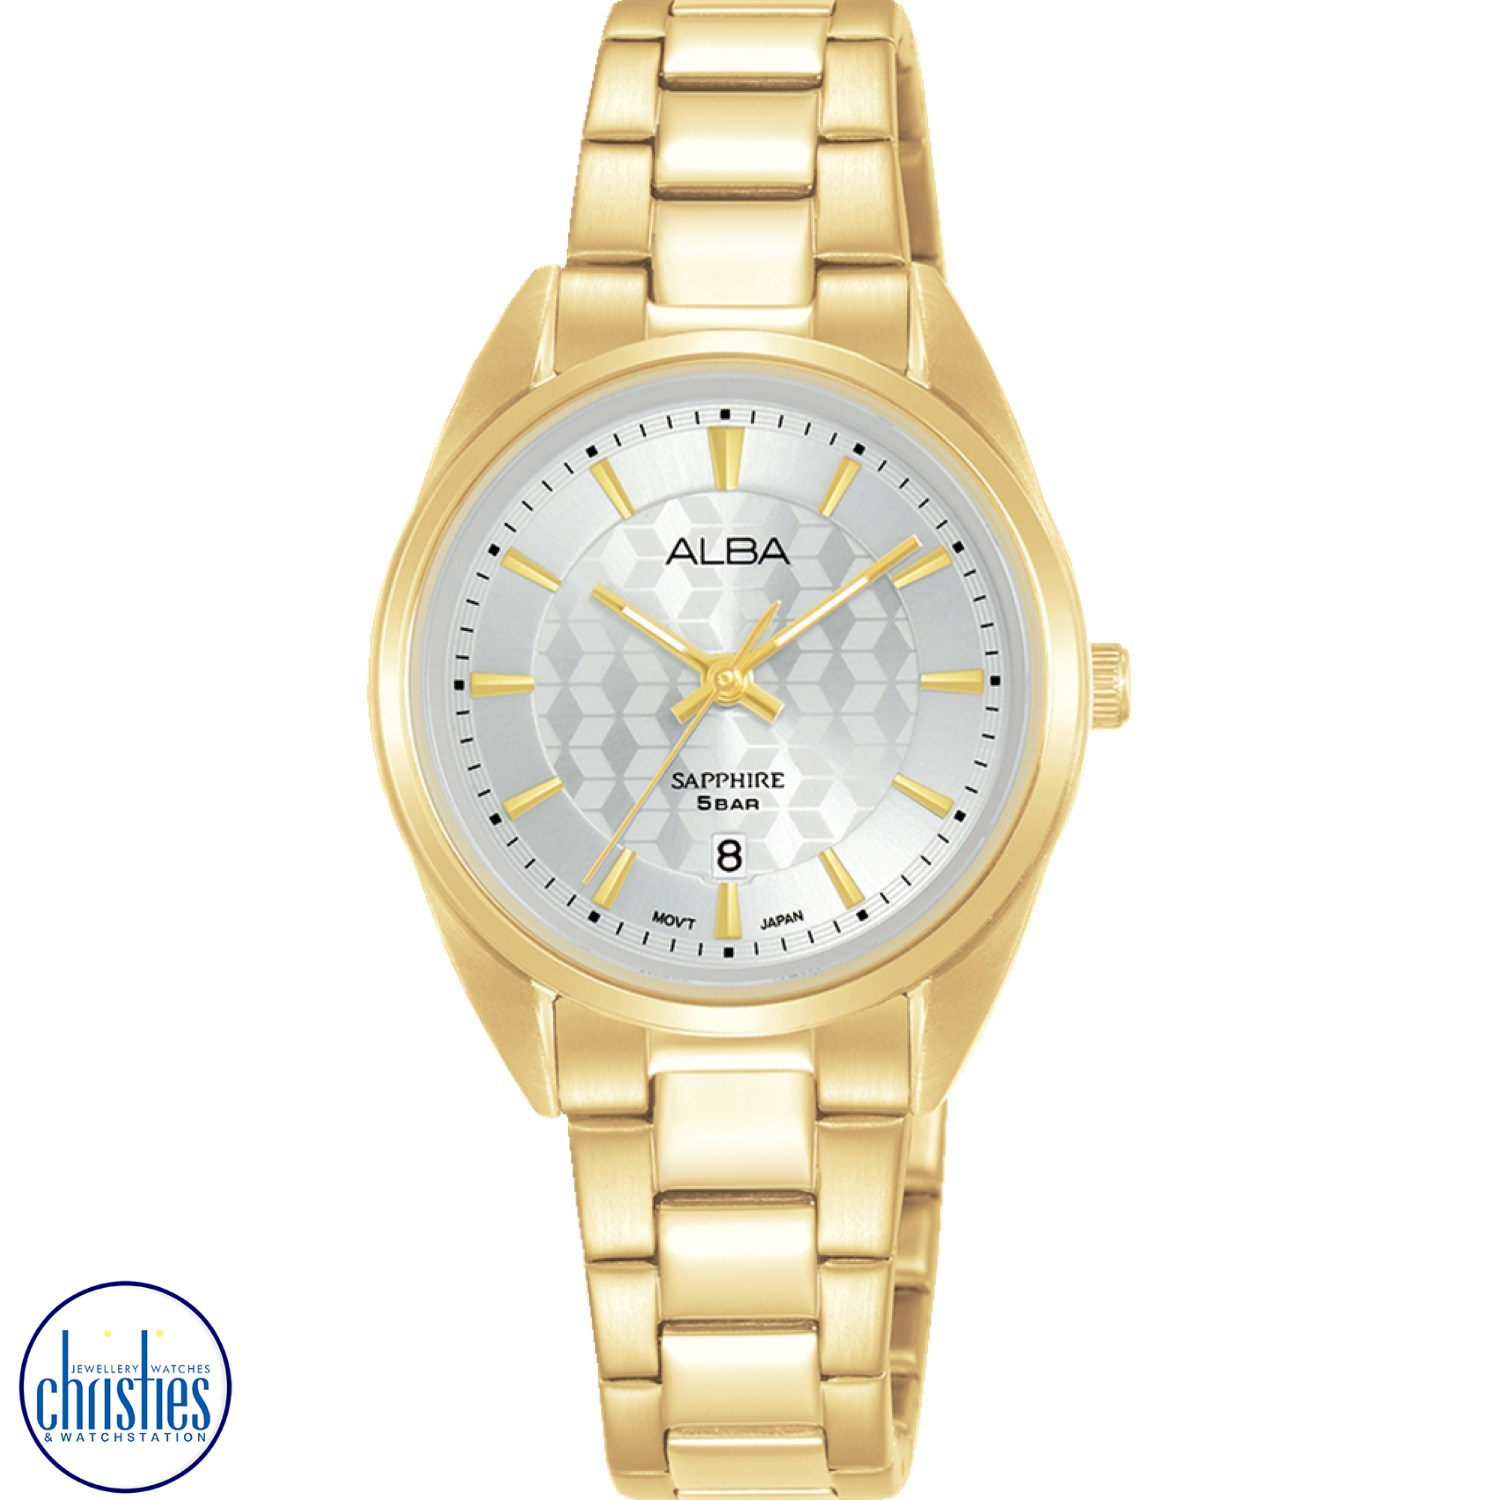 AH7AY4X Ladies Fashion Watch. Alba AH7AY4X is a stylish and elegant gold-toned Watch for women.